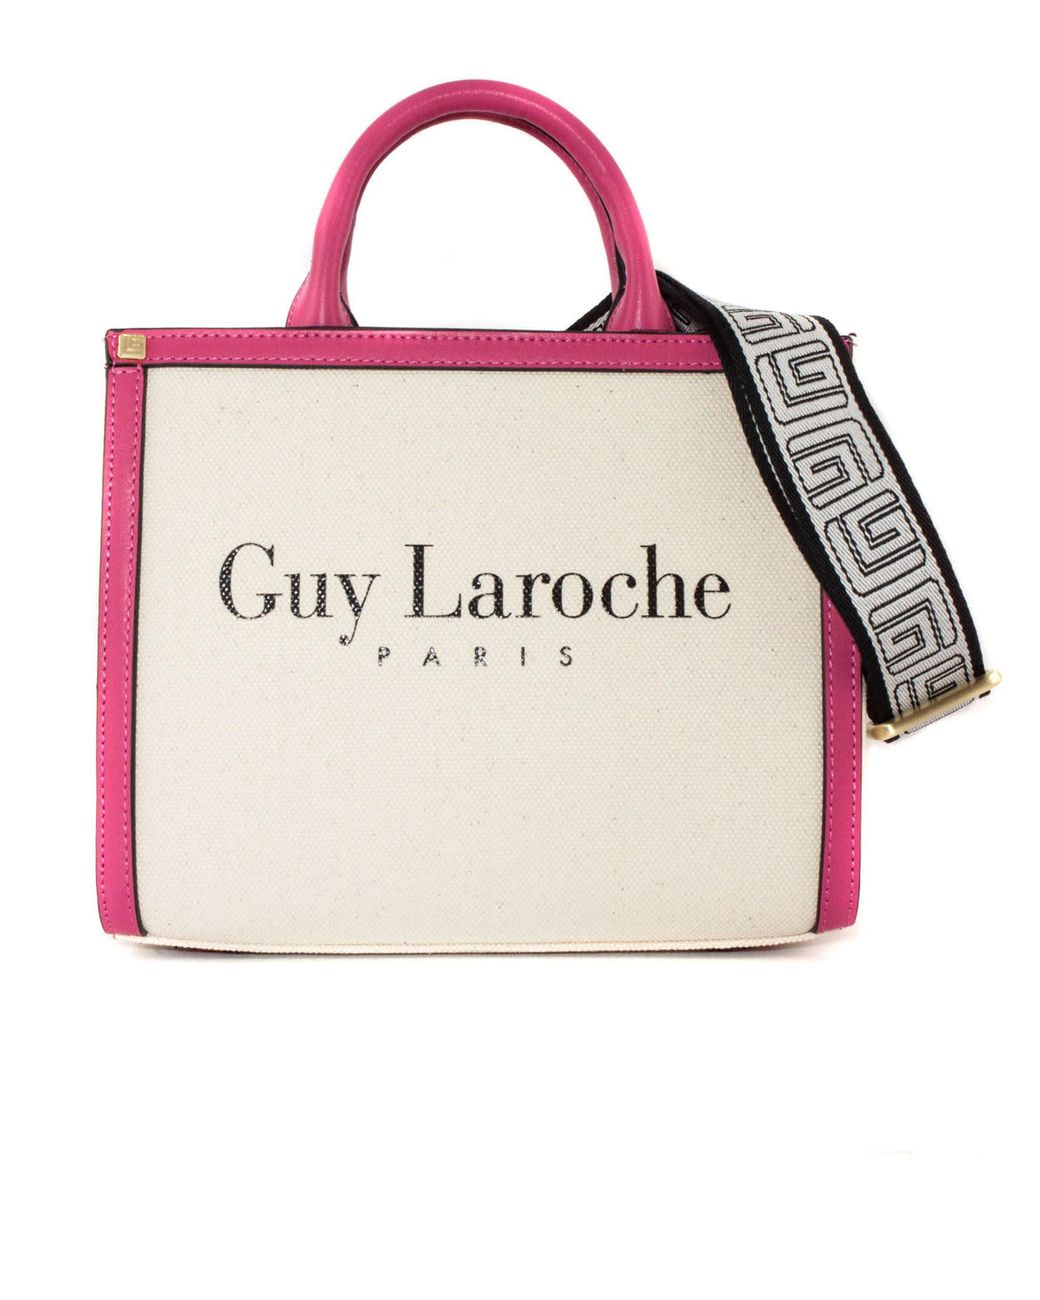 Guy Laroche Beige And Fuchsia Tote Bag in Pink